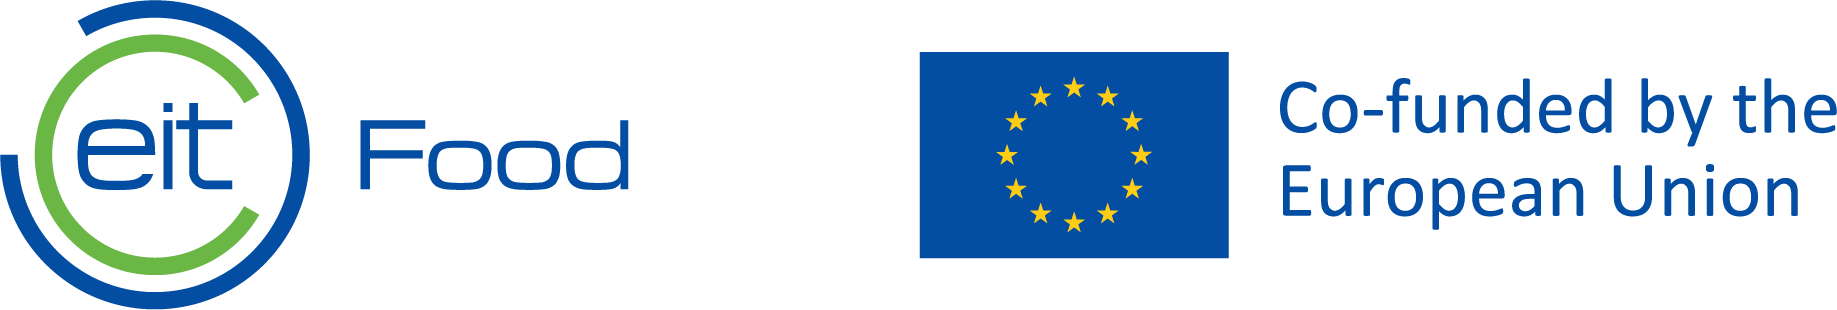 EIT Food/EU co-branding logo